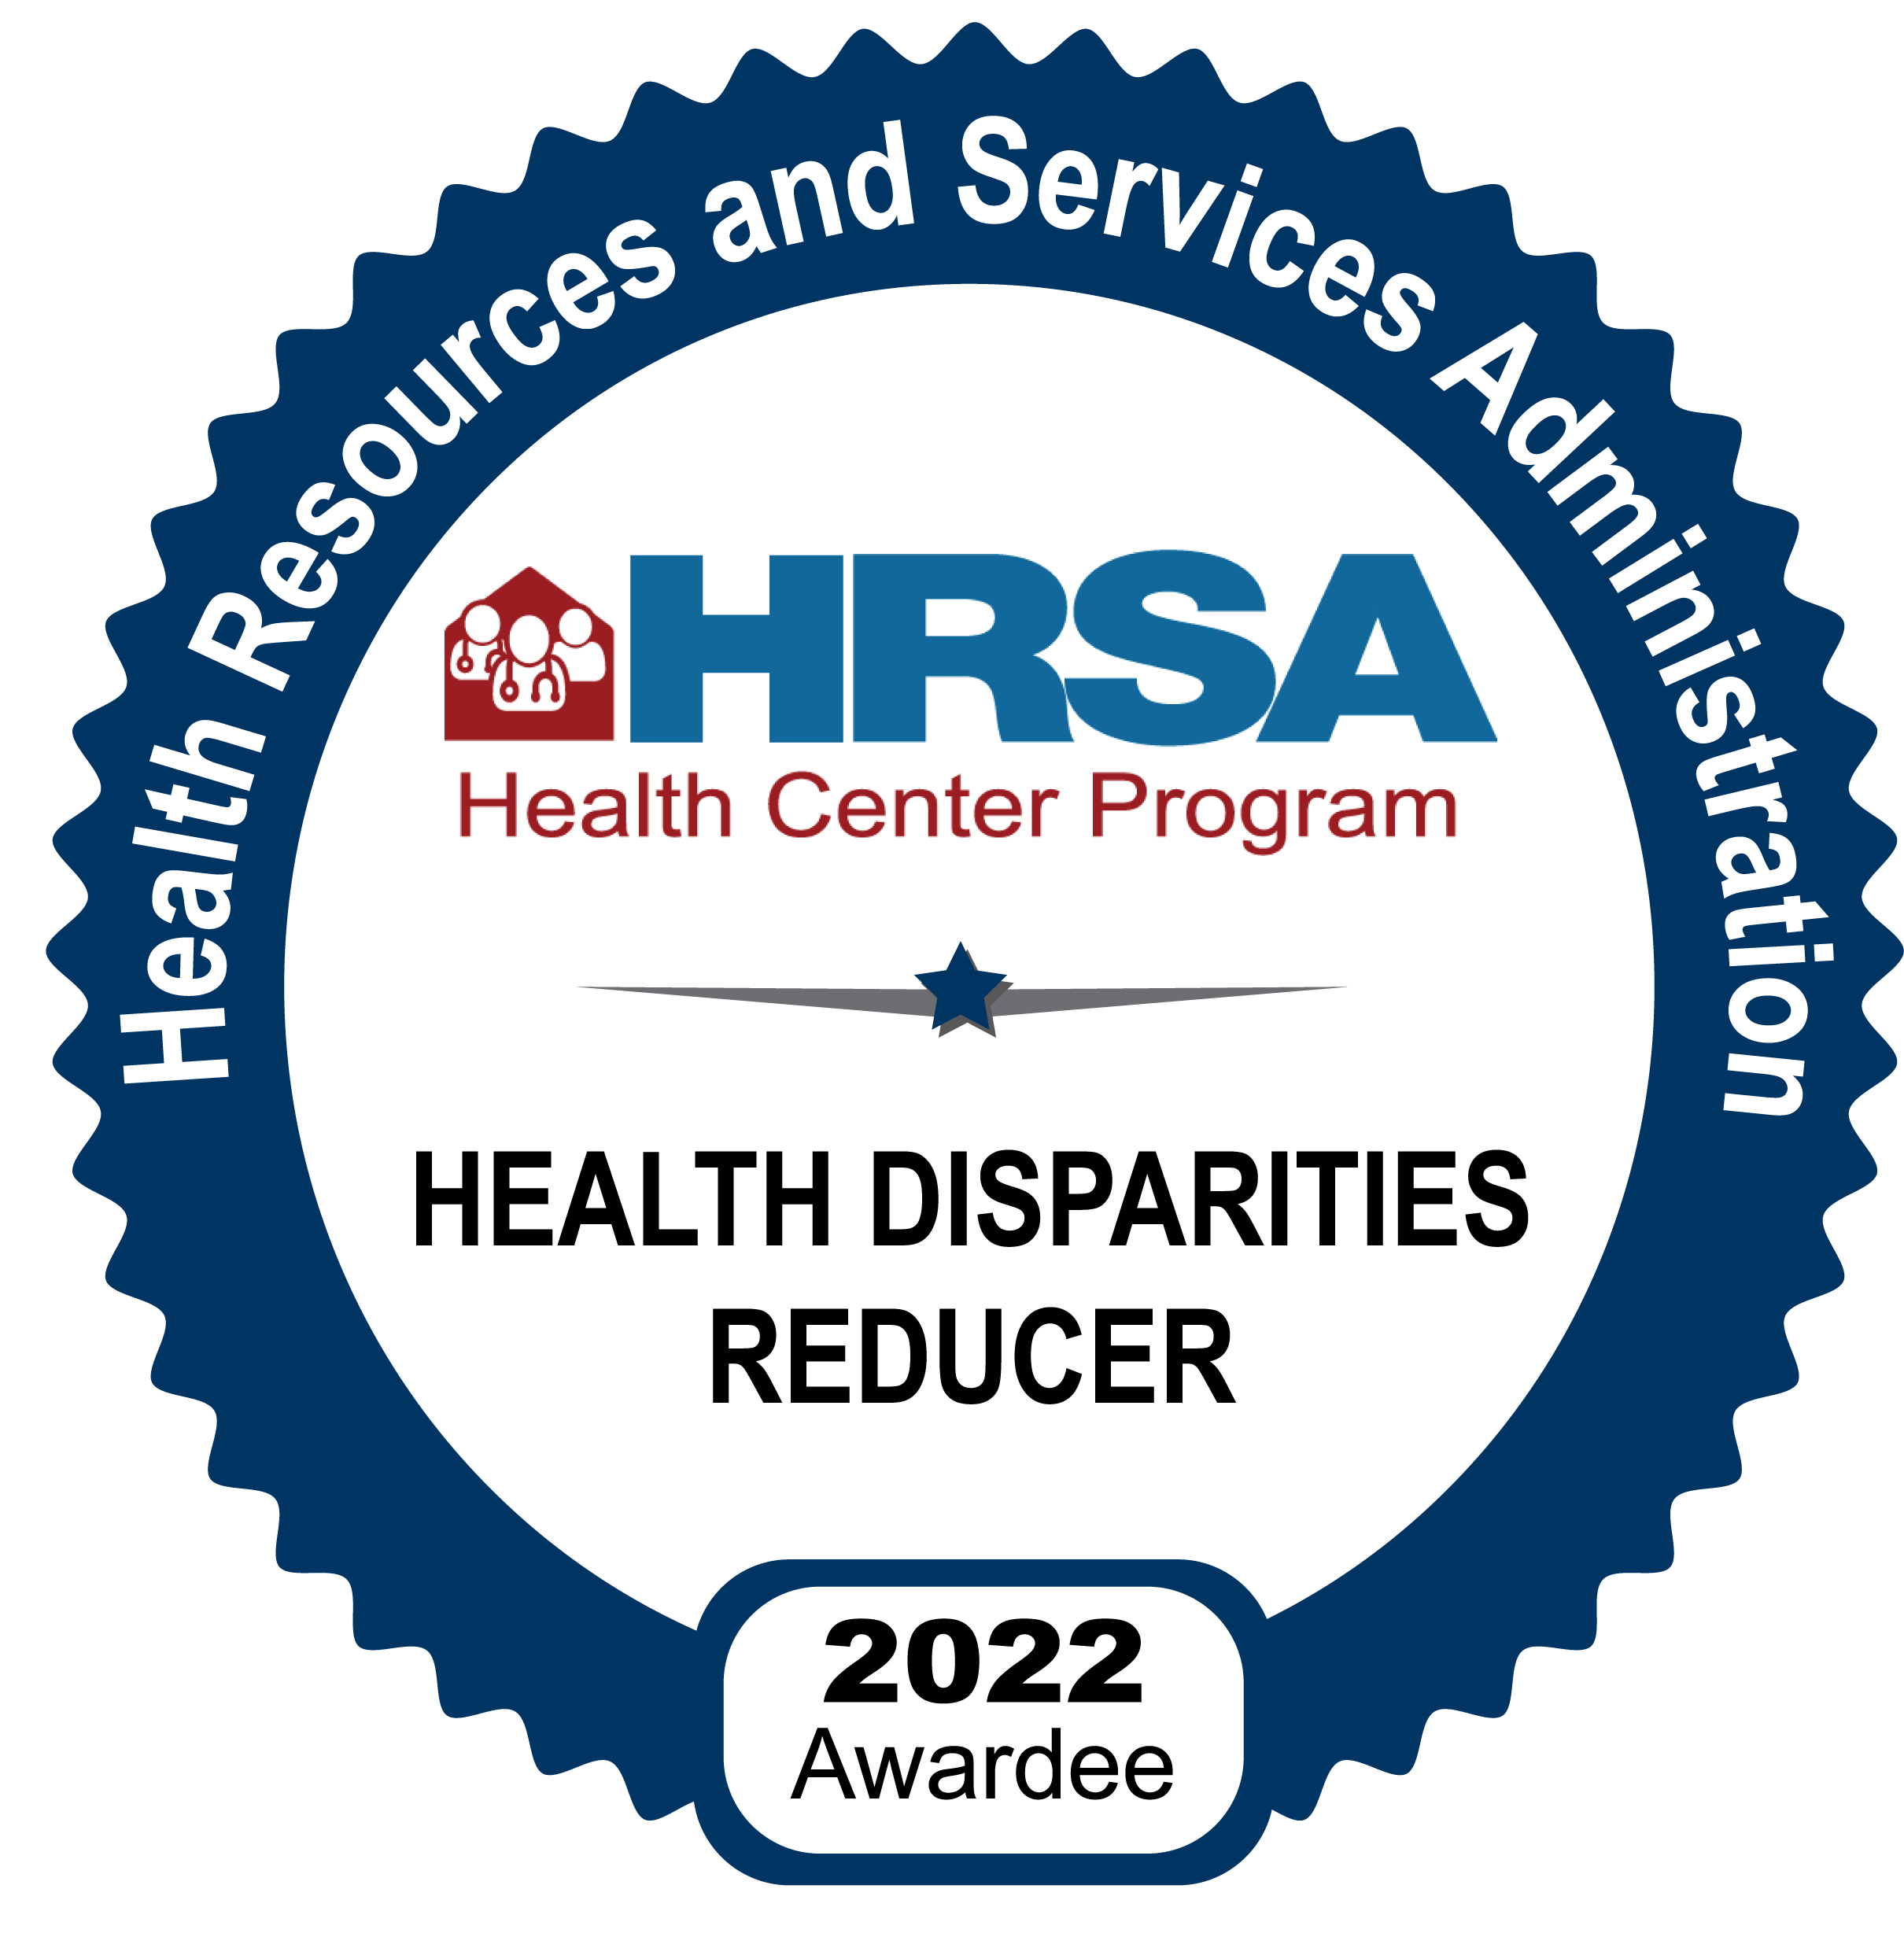 Health Disparities Reducer 2022 Awardee